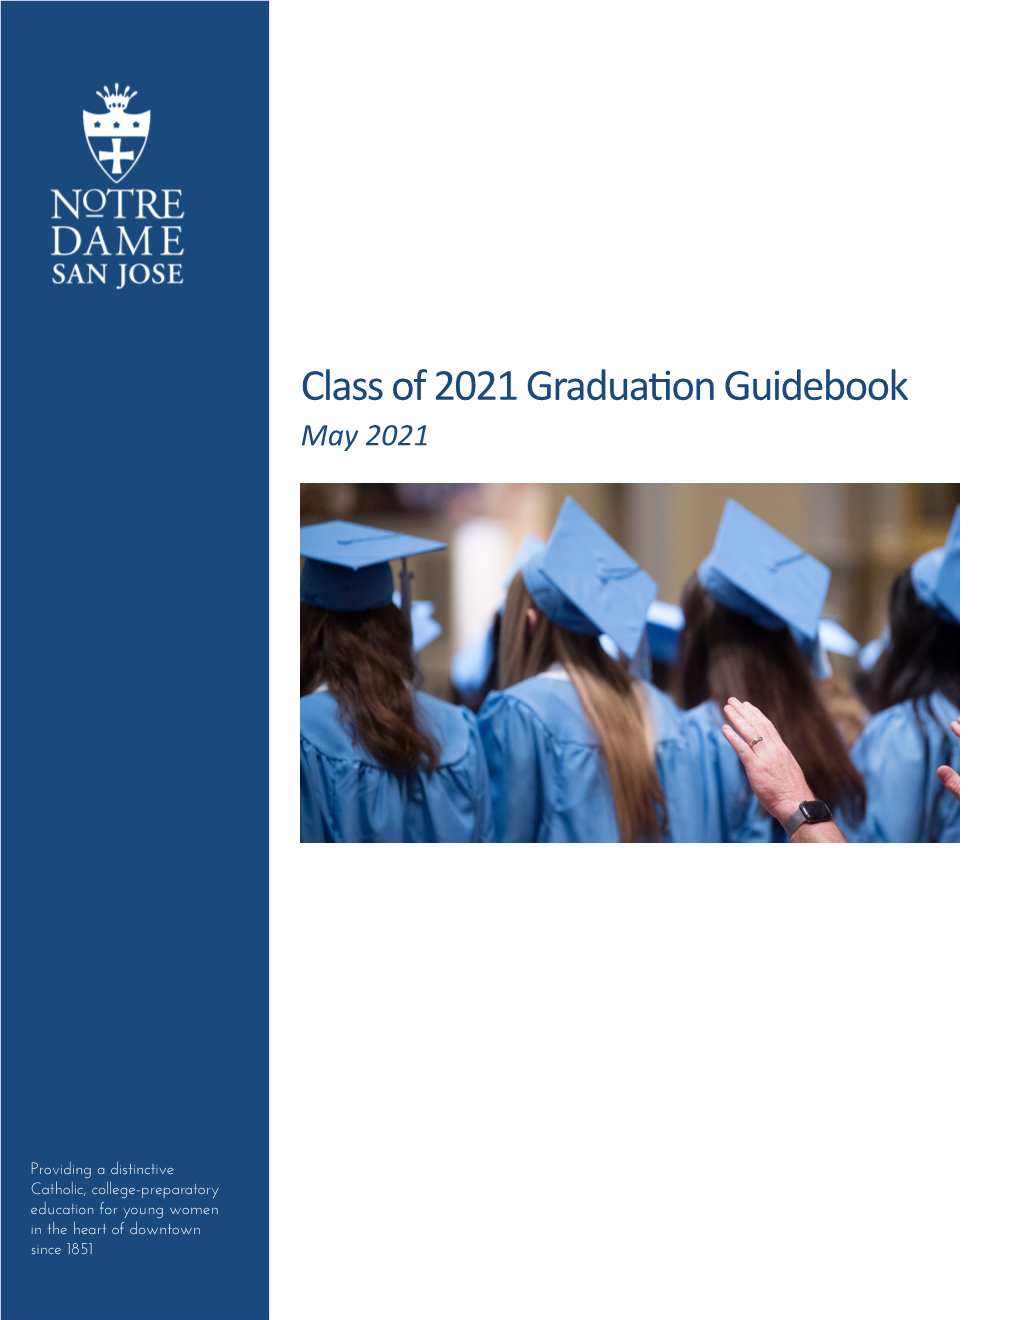 Class of 2021 Graduation Guidebook May 2021